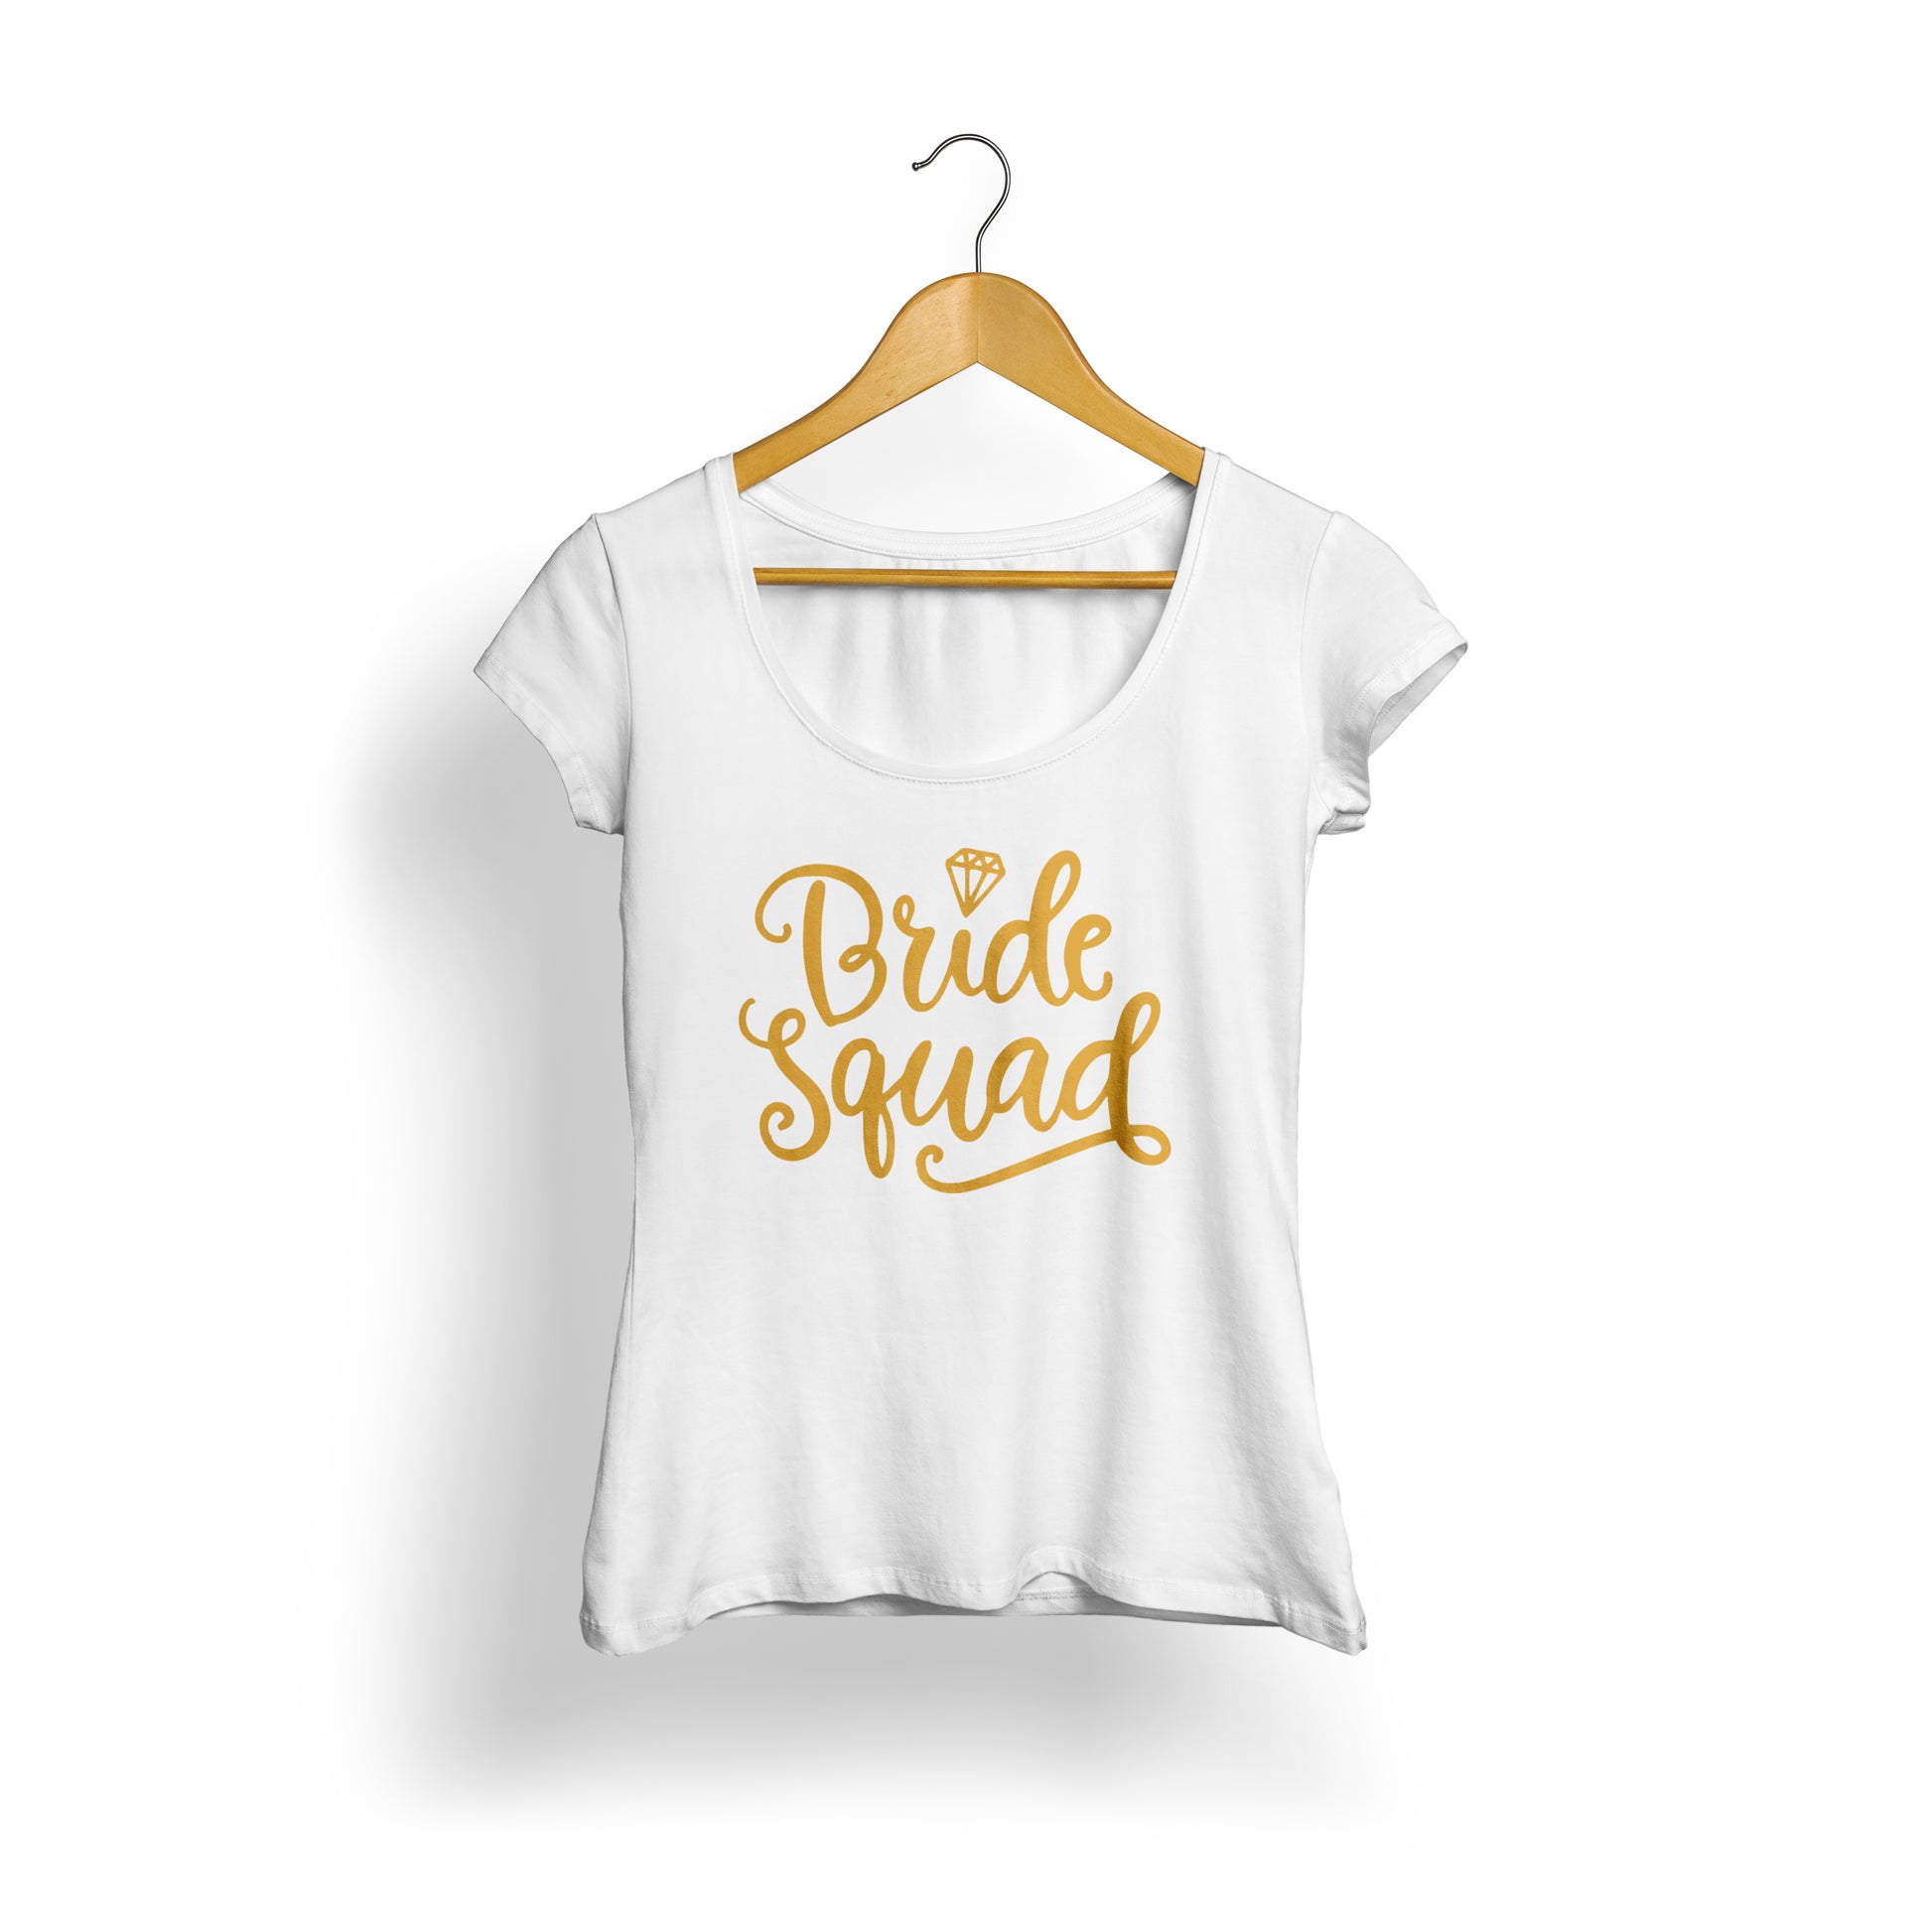 Bride squad t shirt for women- White